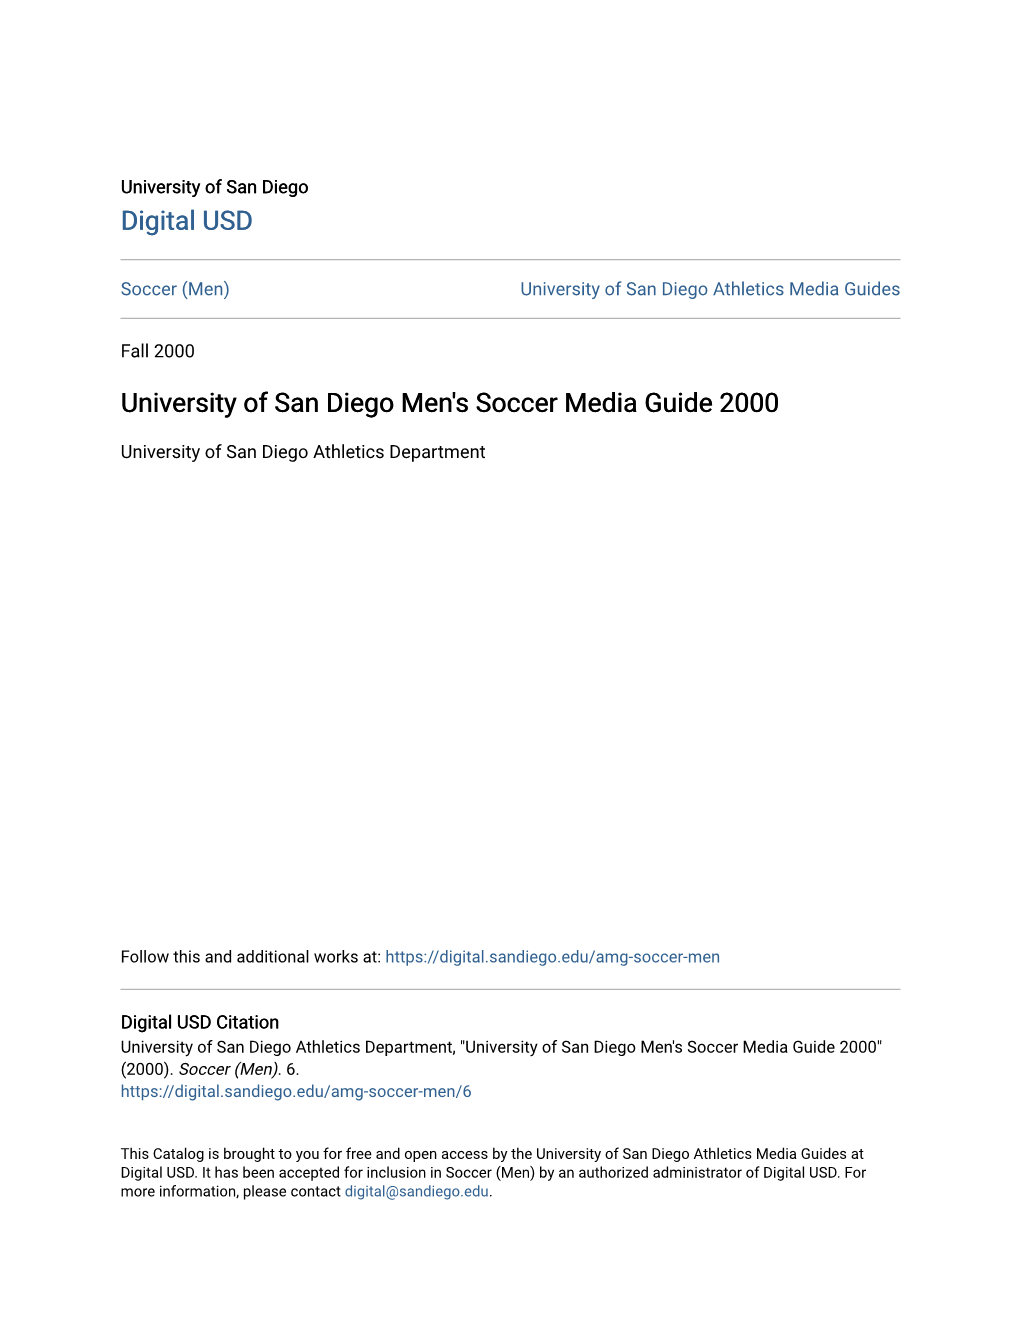 University of San Diego Men's Soccer Media Guide 2000